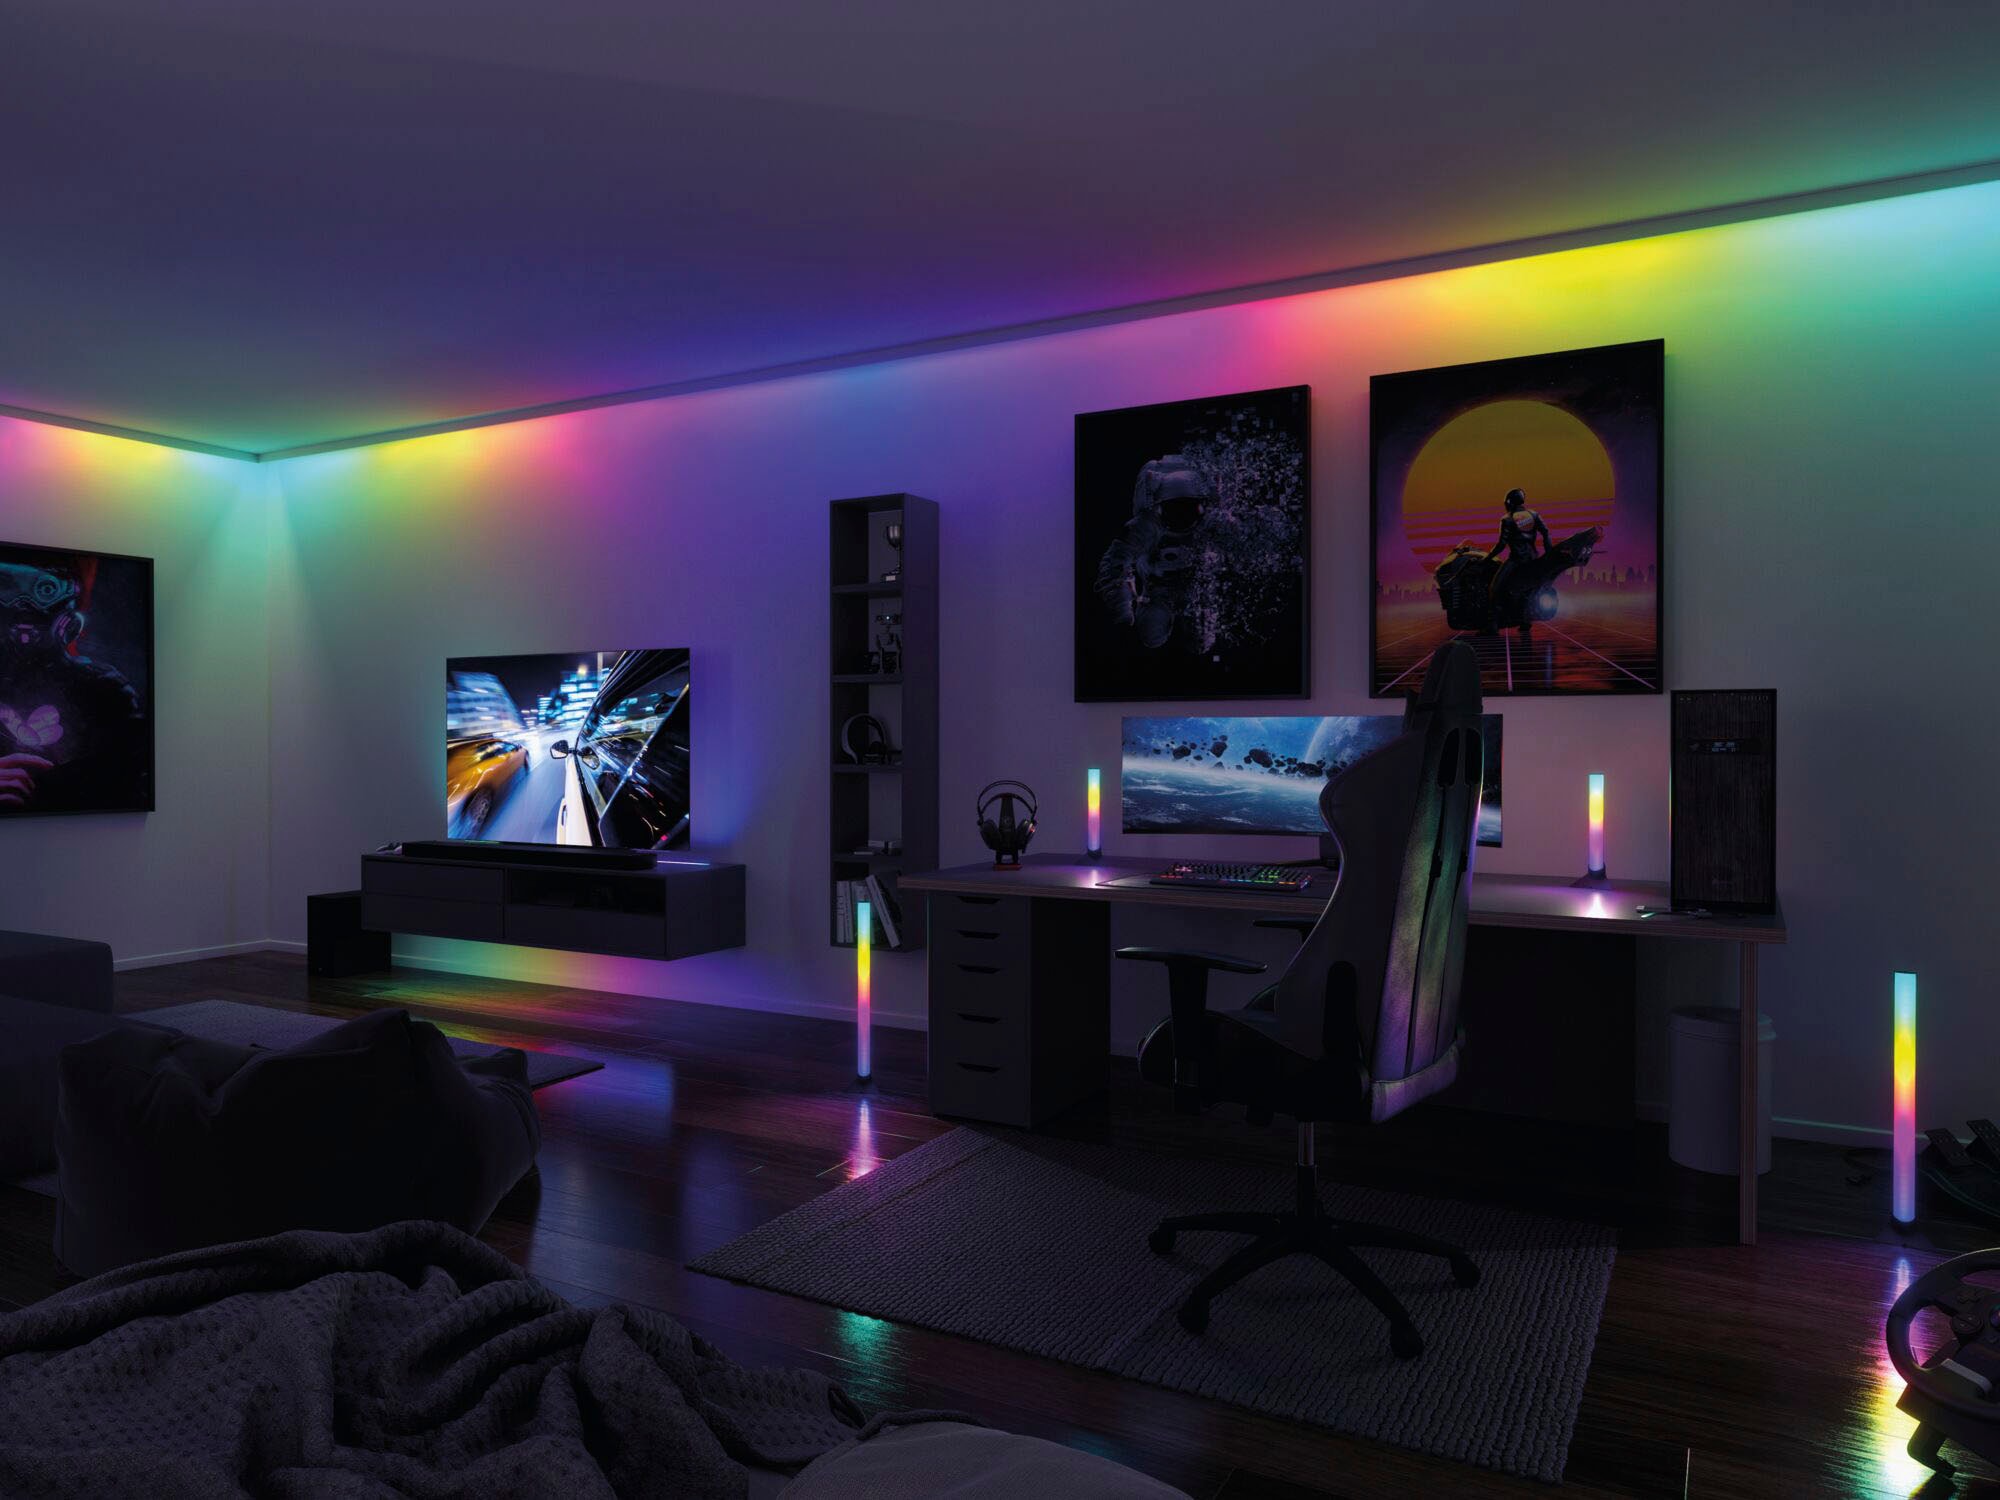 Paulmann LED-Streifen »Dynamic Rainbow RGB 5m 10,5W 60LEDs/m 15VA«, 1 St.-flammig